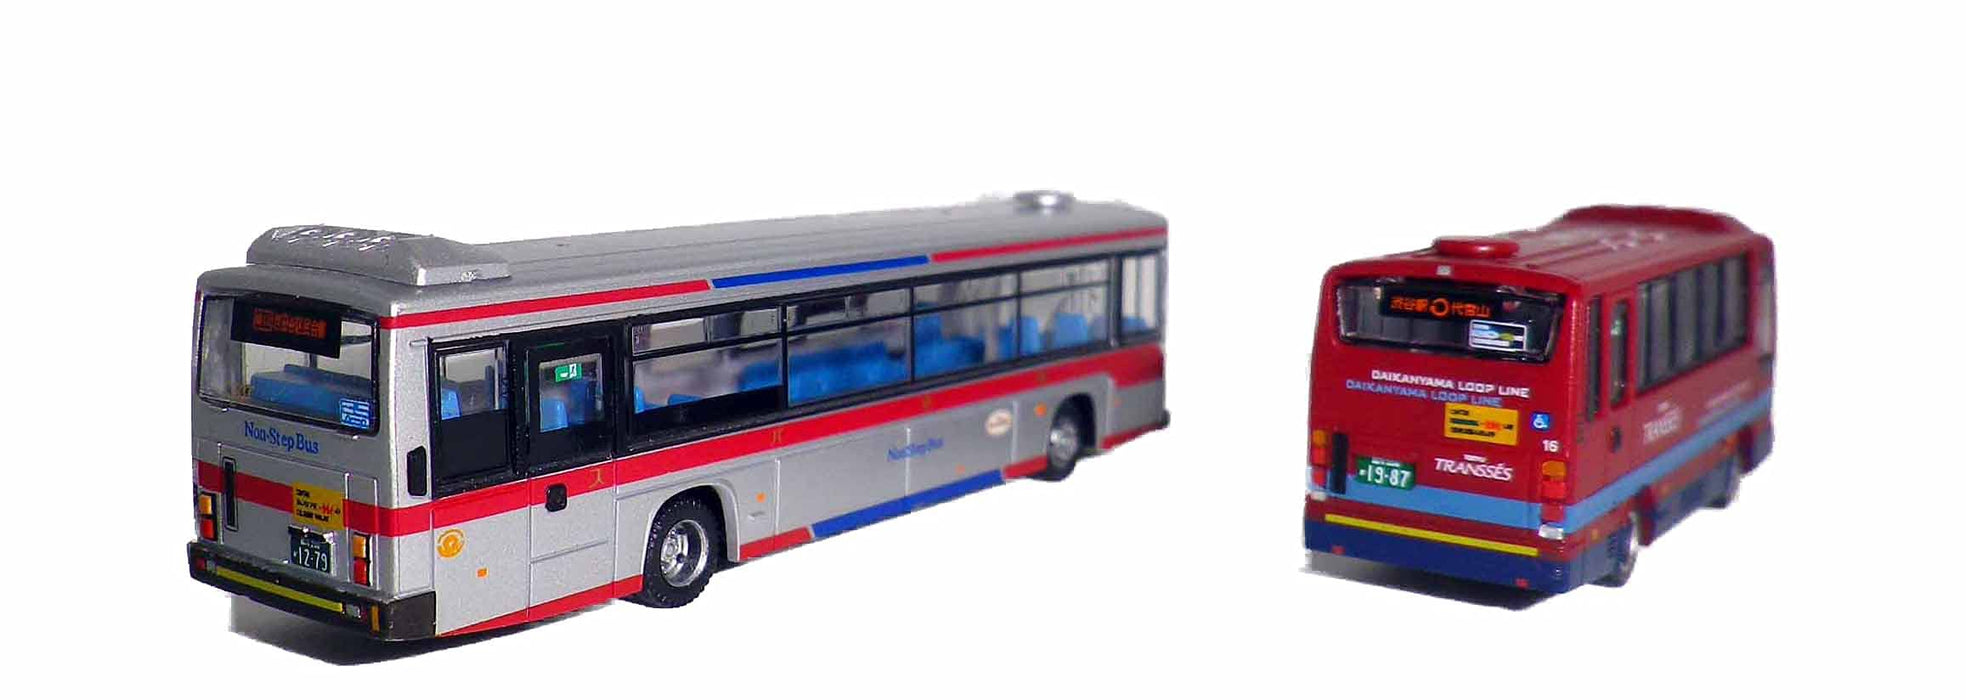 Tomytec 20th Anniversary Tokyu Transe Bus Collection Set